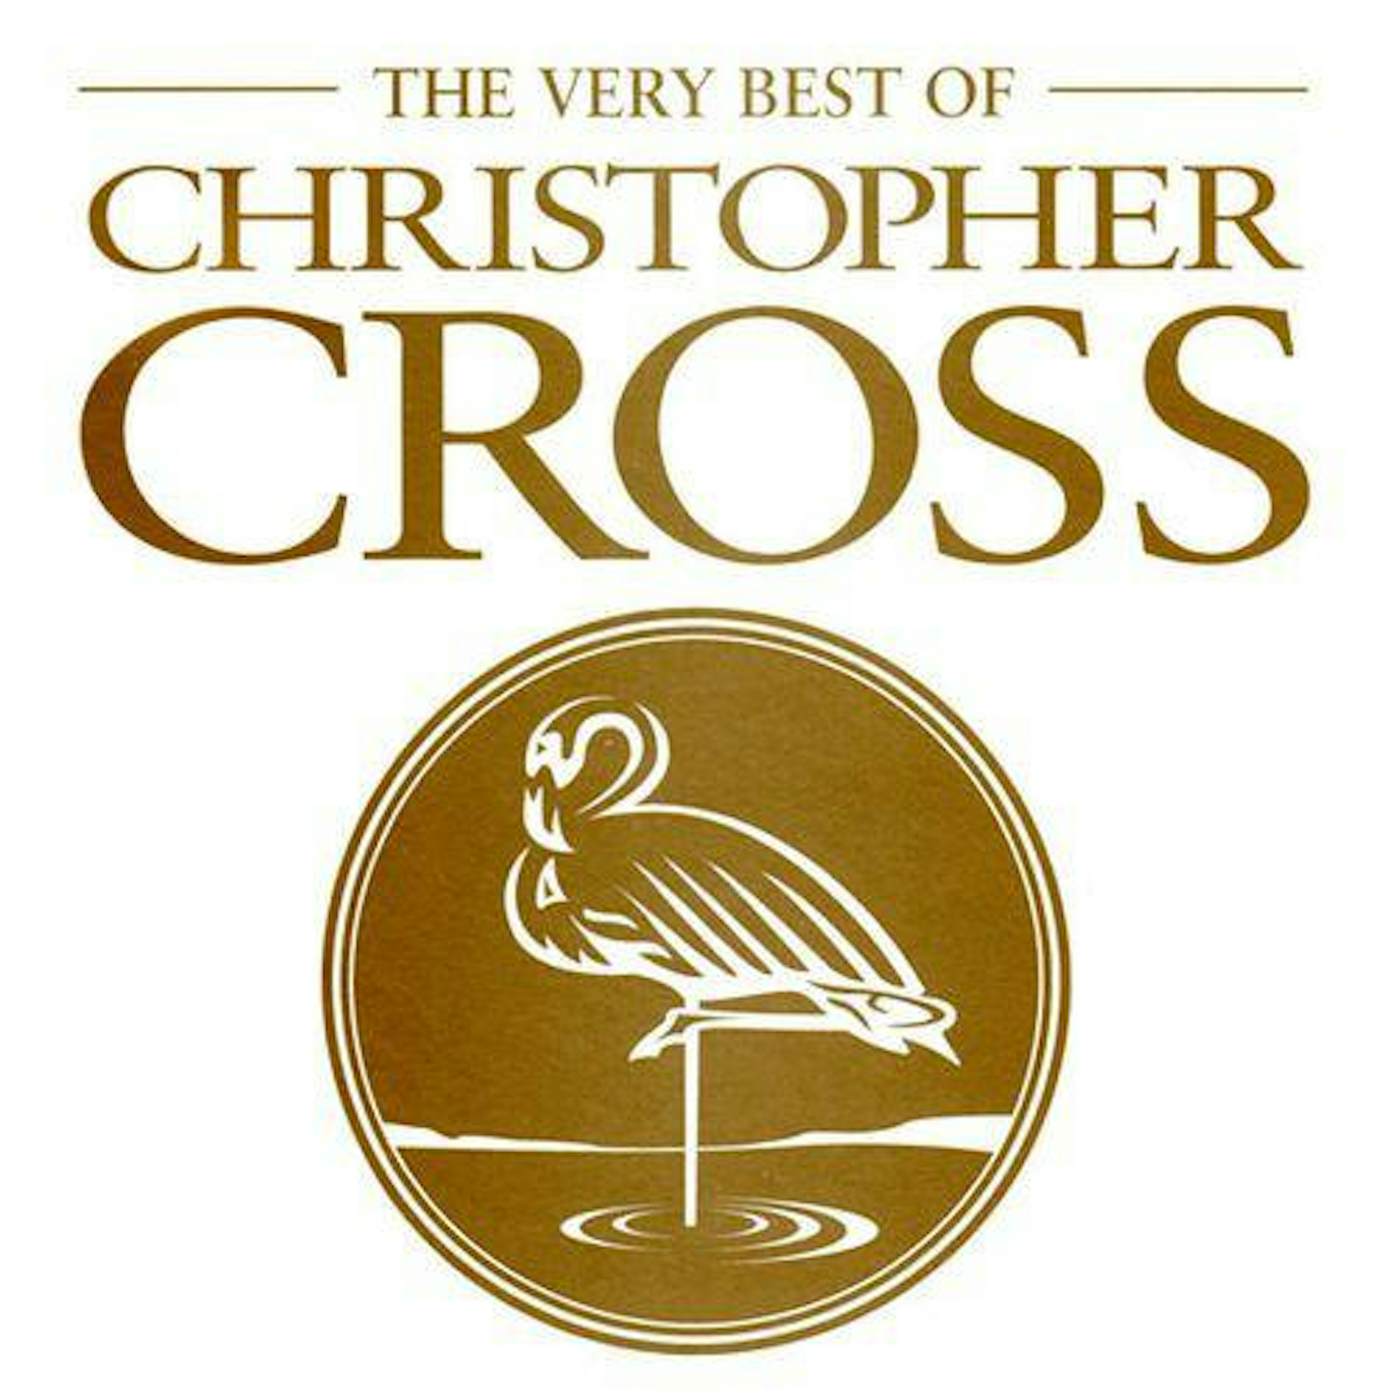 VERY BEST OF CHRISTOPHER CROSS CD